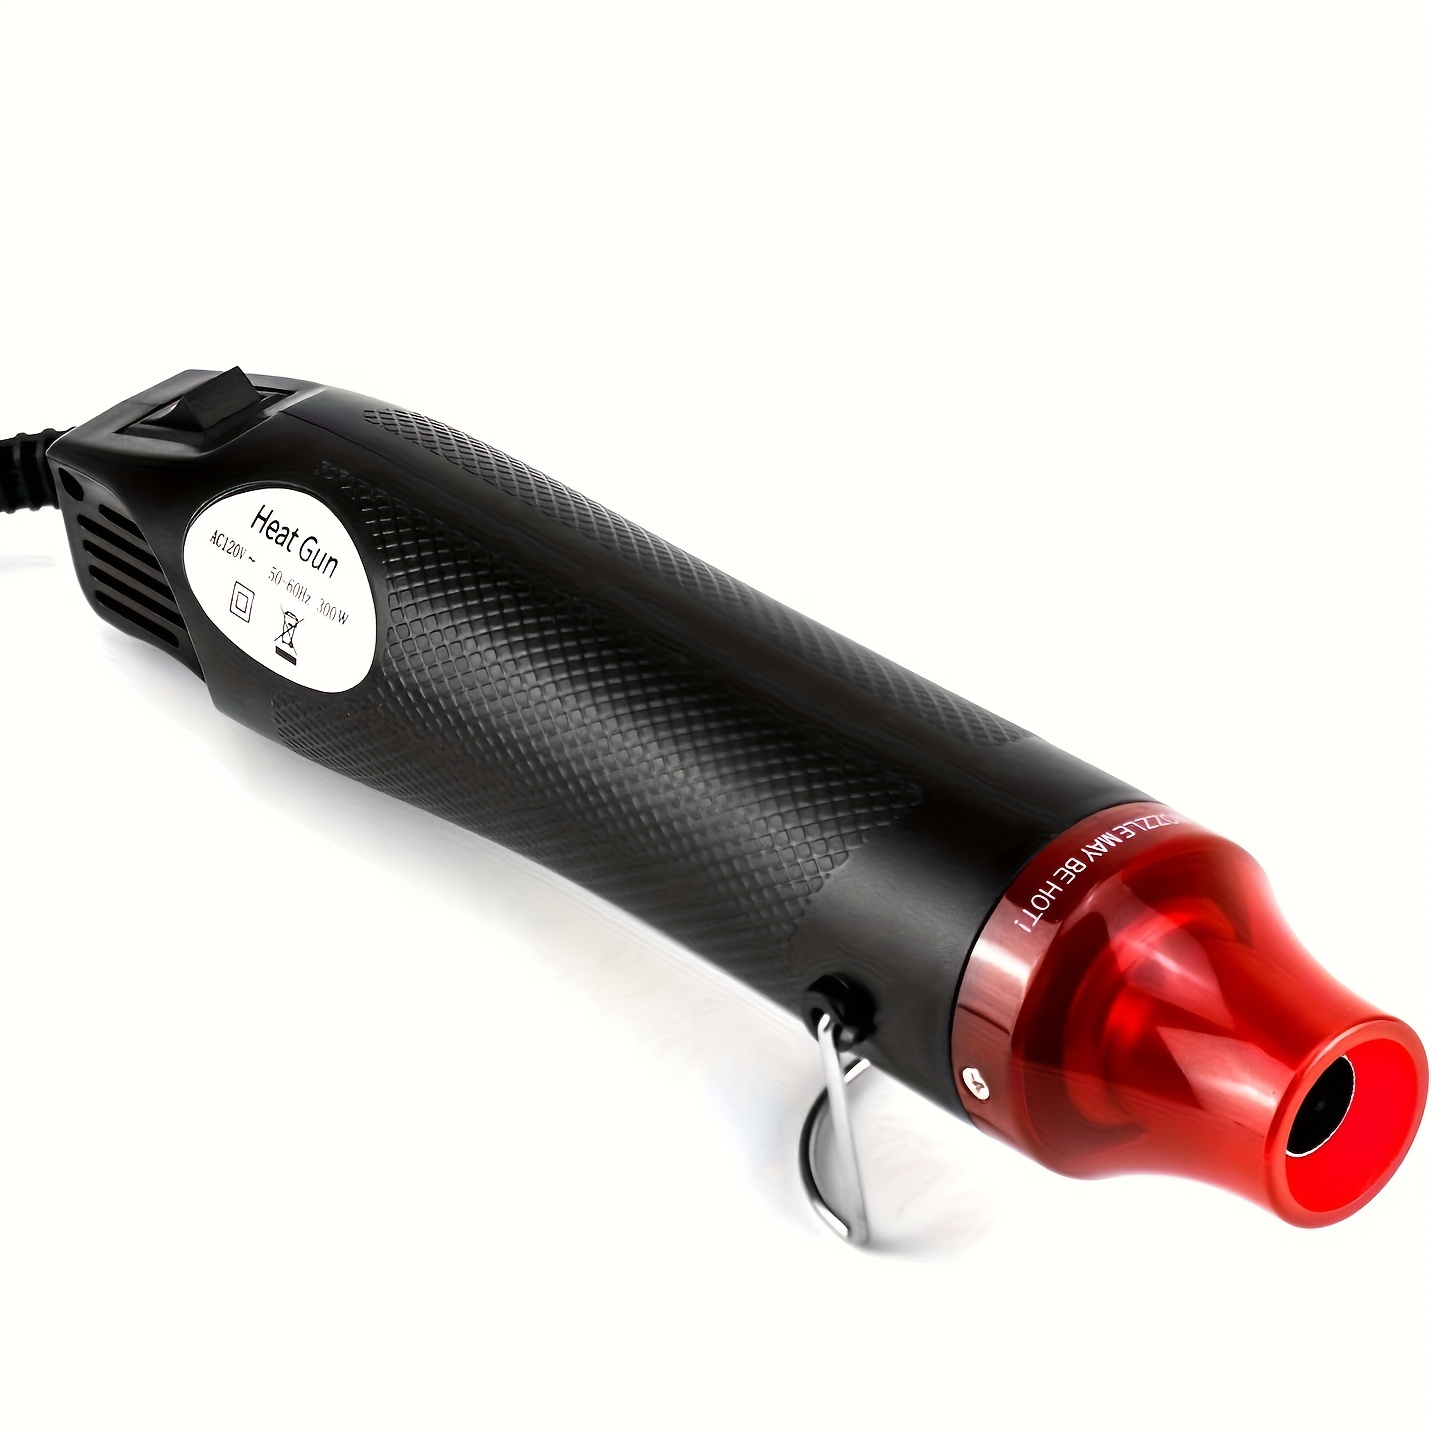 Mini Heat Gun for Epoxy Resin Crafts,300W High temp heat gun With 40 inchs  Power Cord for phone repair